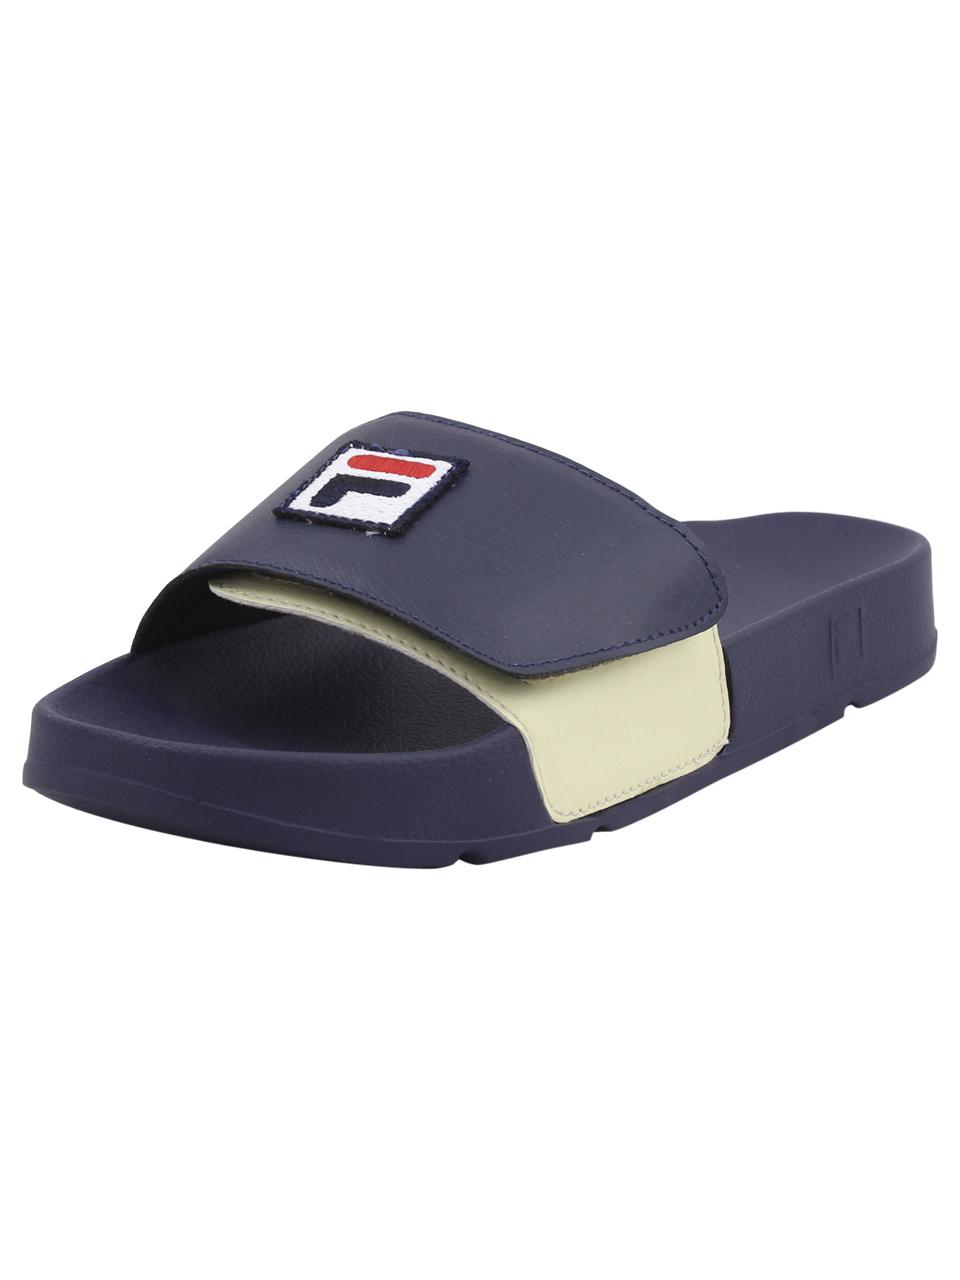 Fila Men's Drifter Strap Slides Sandals Shoes - Fila Navy/Fila Red/Fila Cream - 13 D(M) US